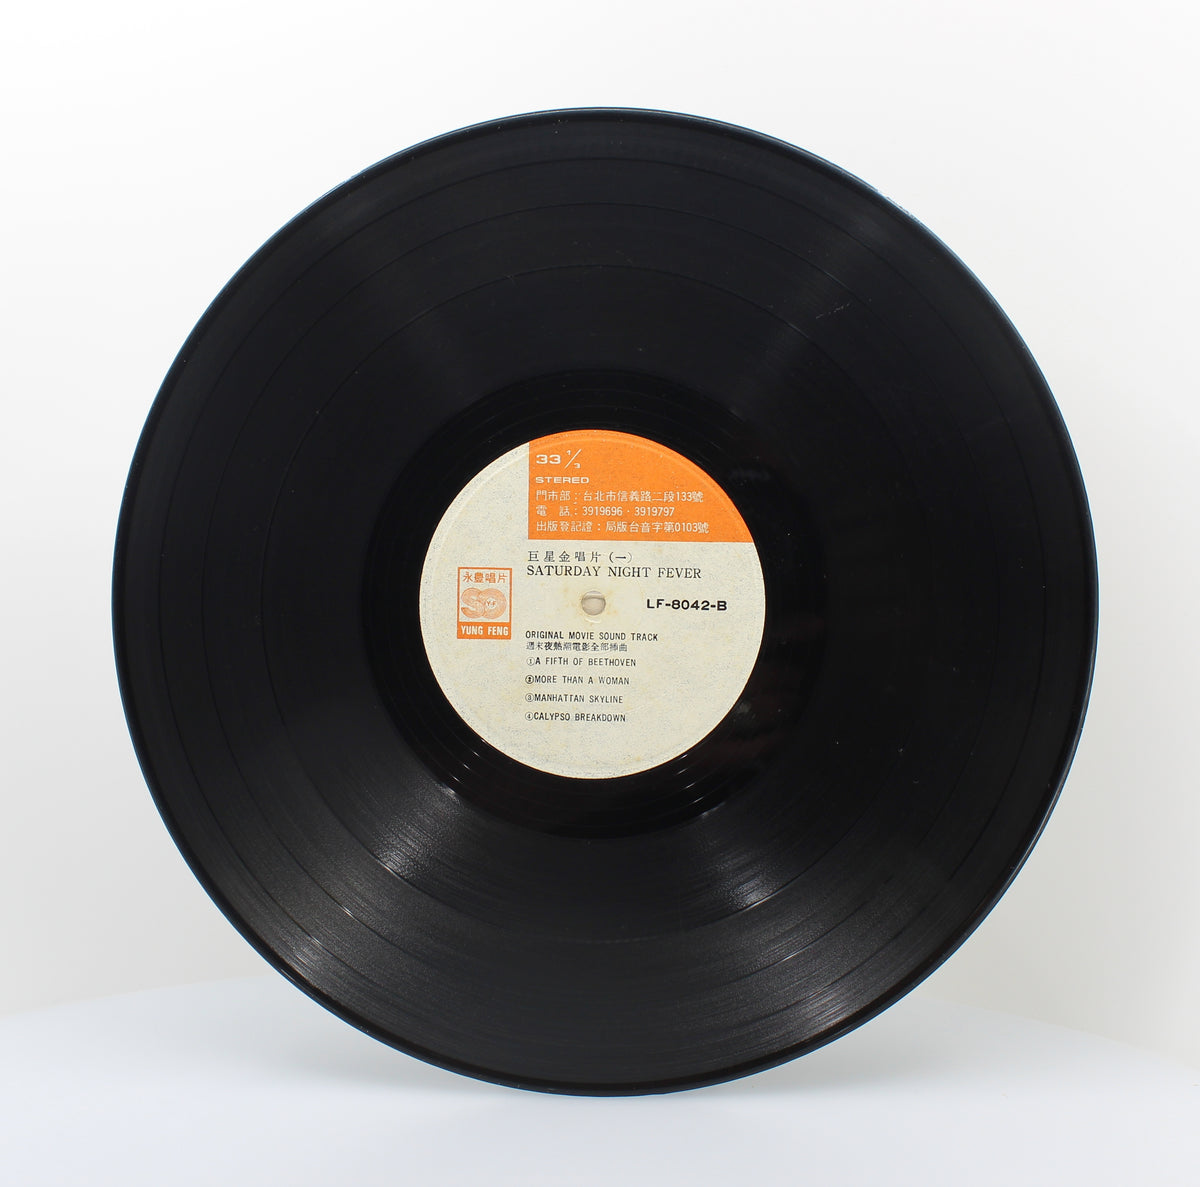 Bee Gees - Saturday Night Fever, 2 x Vinyl Album (33 ⅓rpm), Taiwan 1977